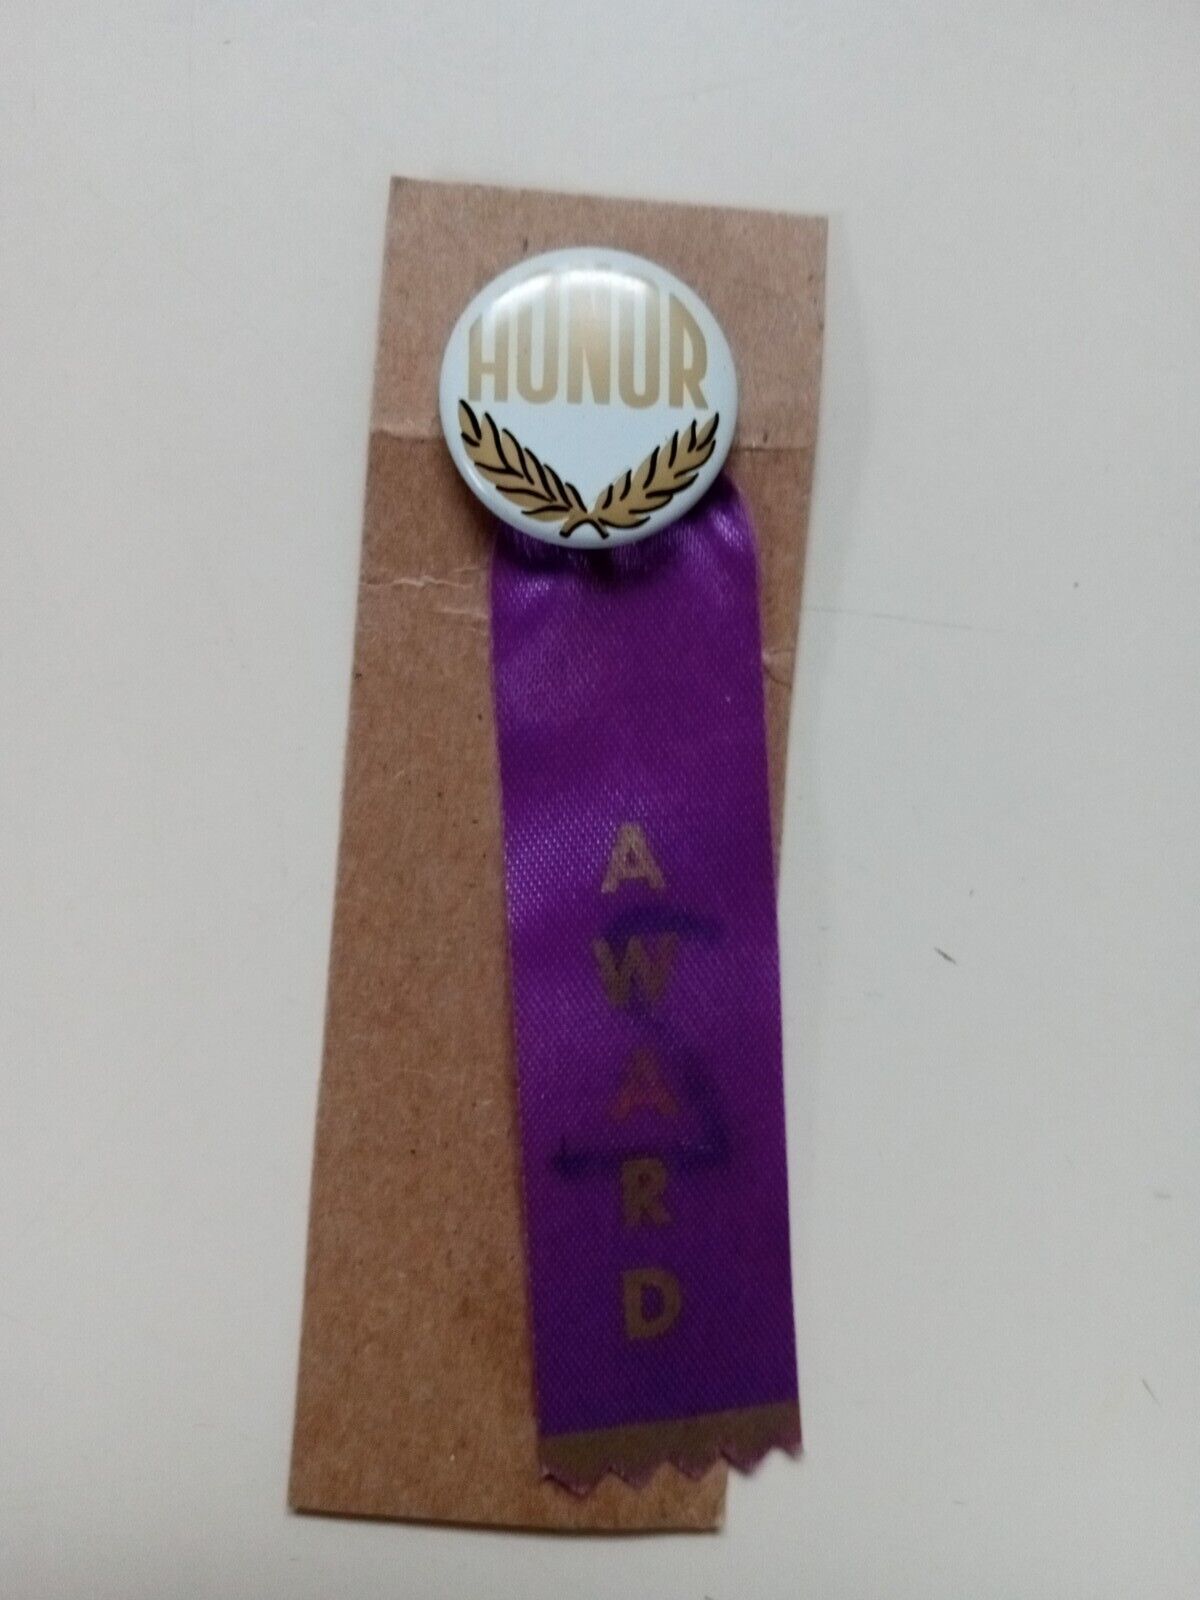 Vintage Purple Honor Award Ribbon Button/Pin USED SEE PHOTOS